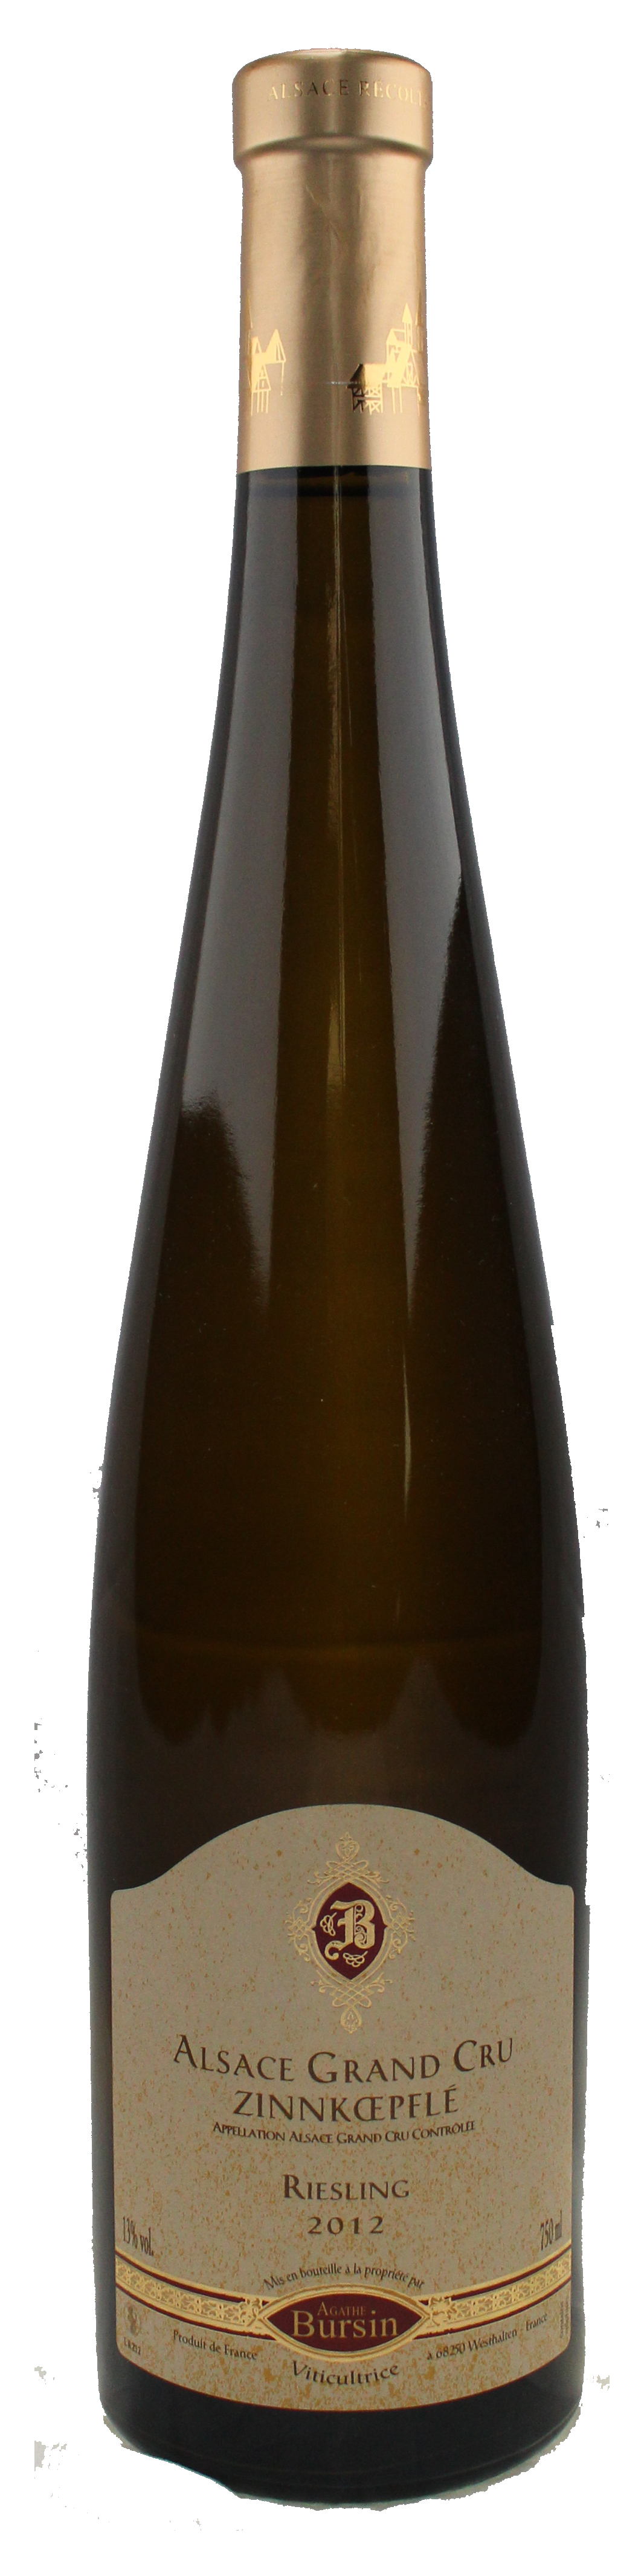 Bottle shot of 2014 Riesling Grand Cru Zinnkoepfle